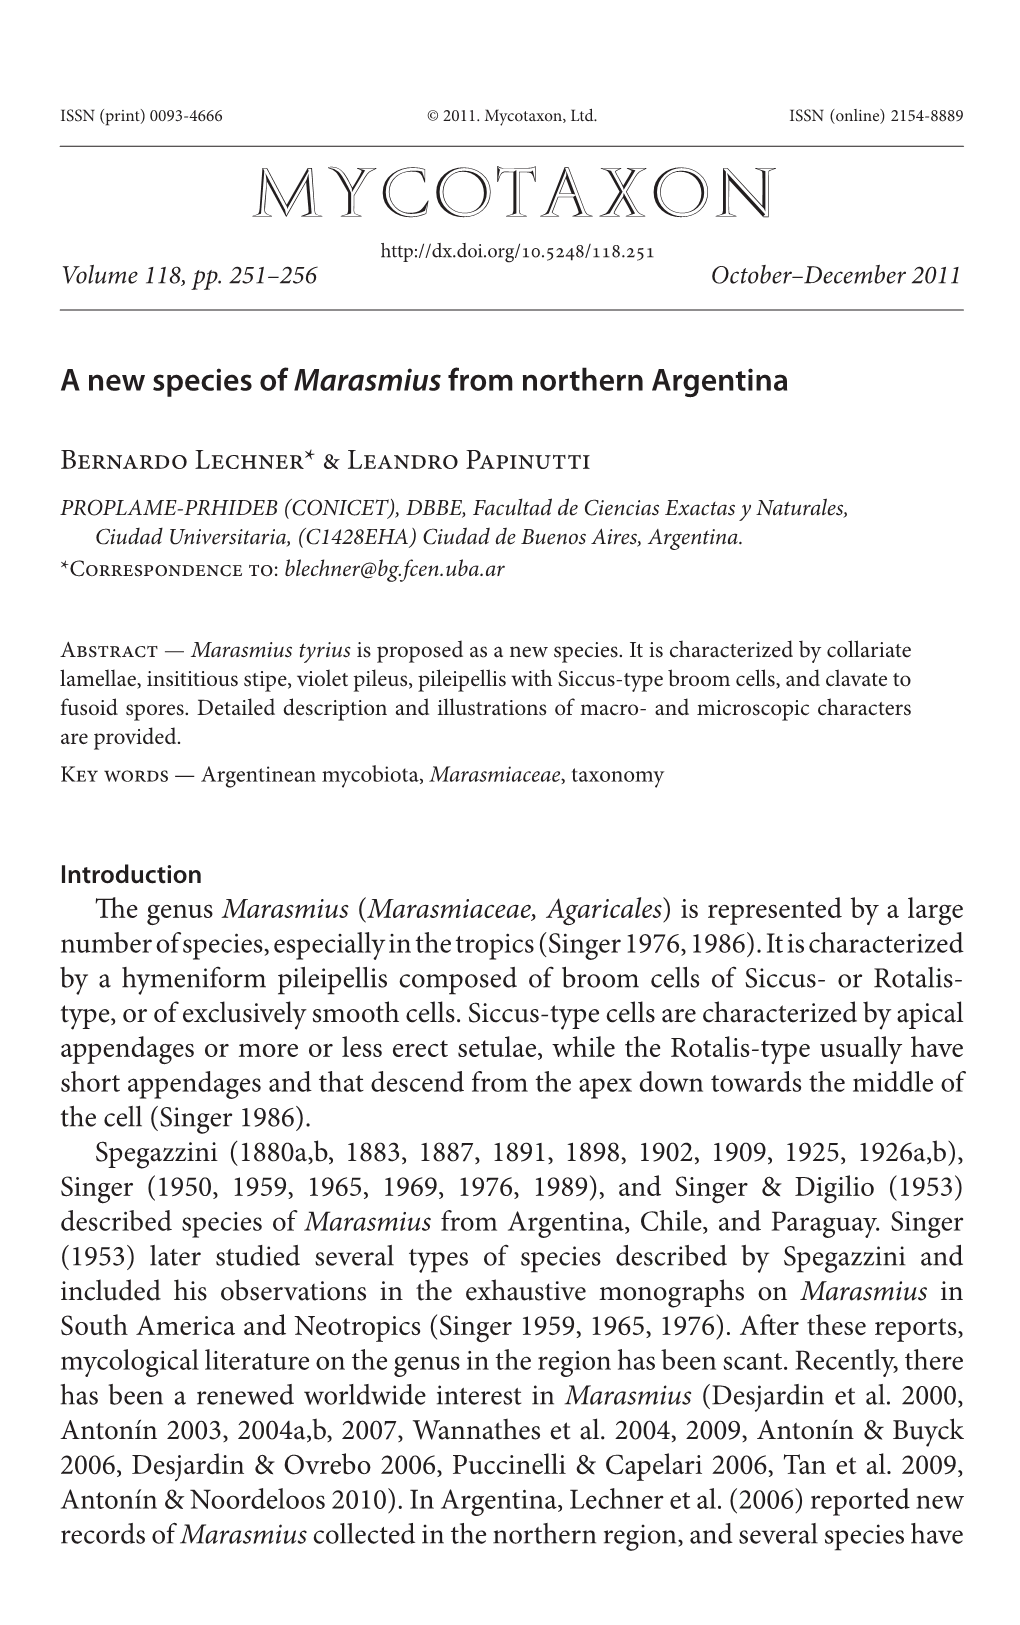 &lt;I&gt;Marasmius&lt;/I&gt; from Northern Argentina